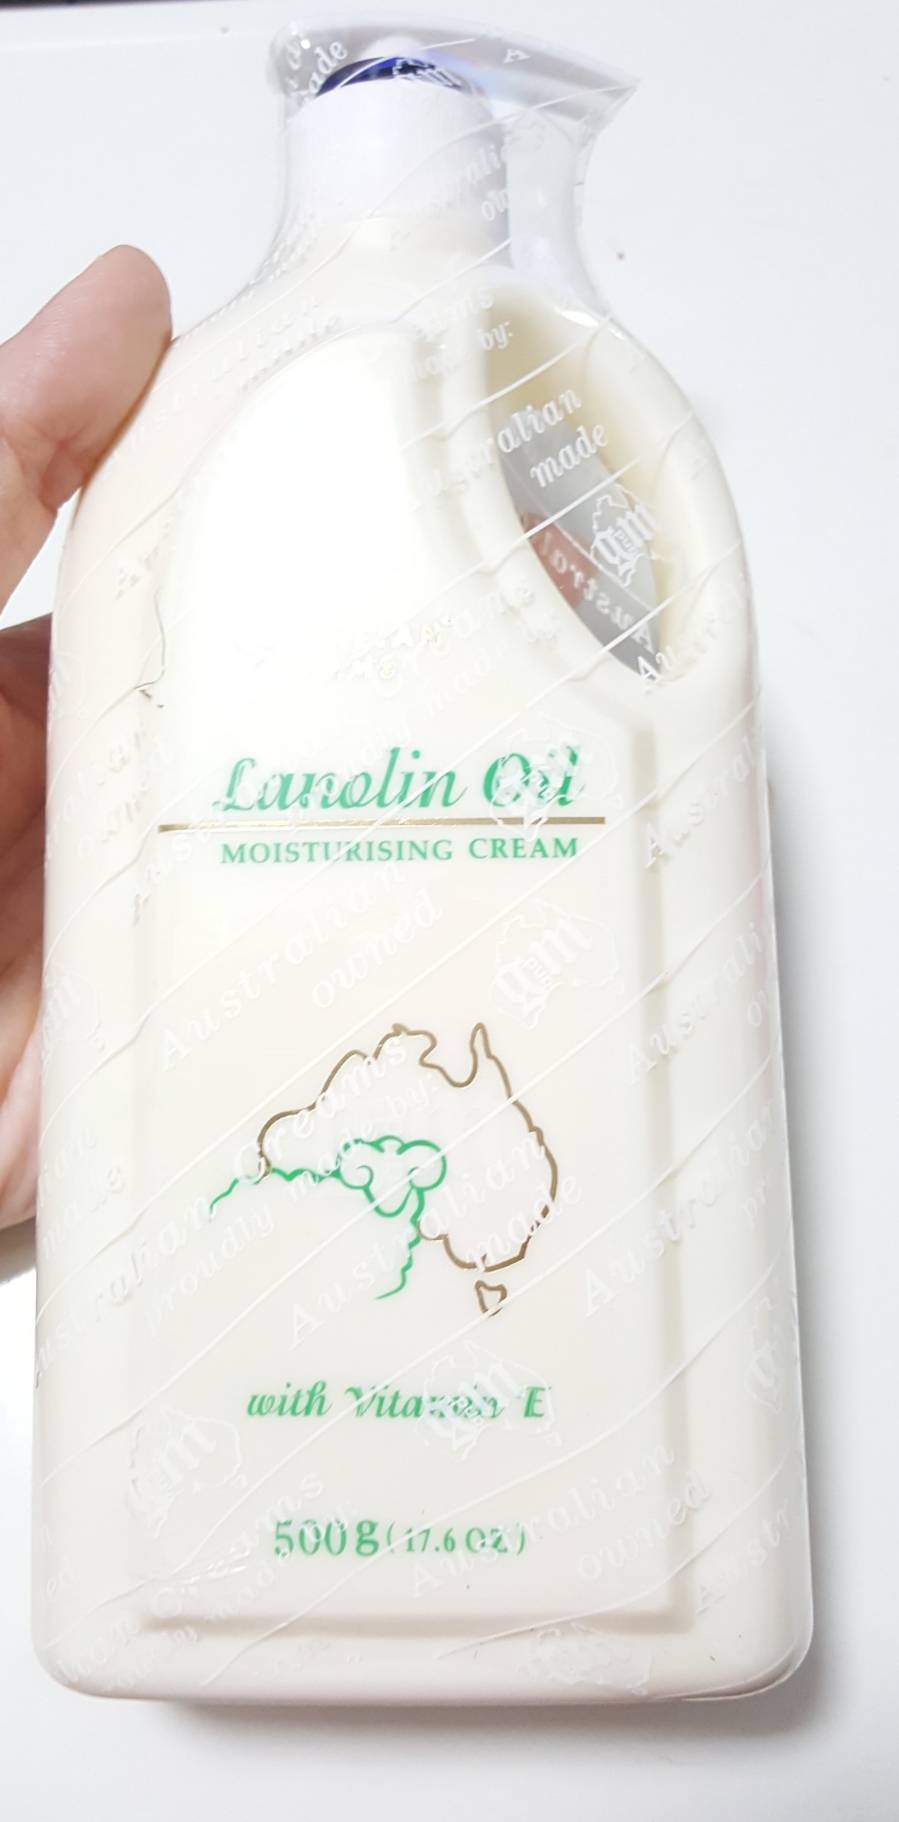 Australian Lanolin Oil Moisturising Cream with vitamin E ลดริ้วรอย เสริมสร้างคอลลาเจน ขวดปั้ม 500g .